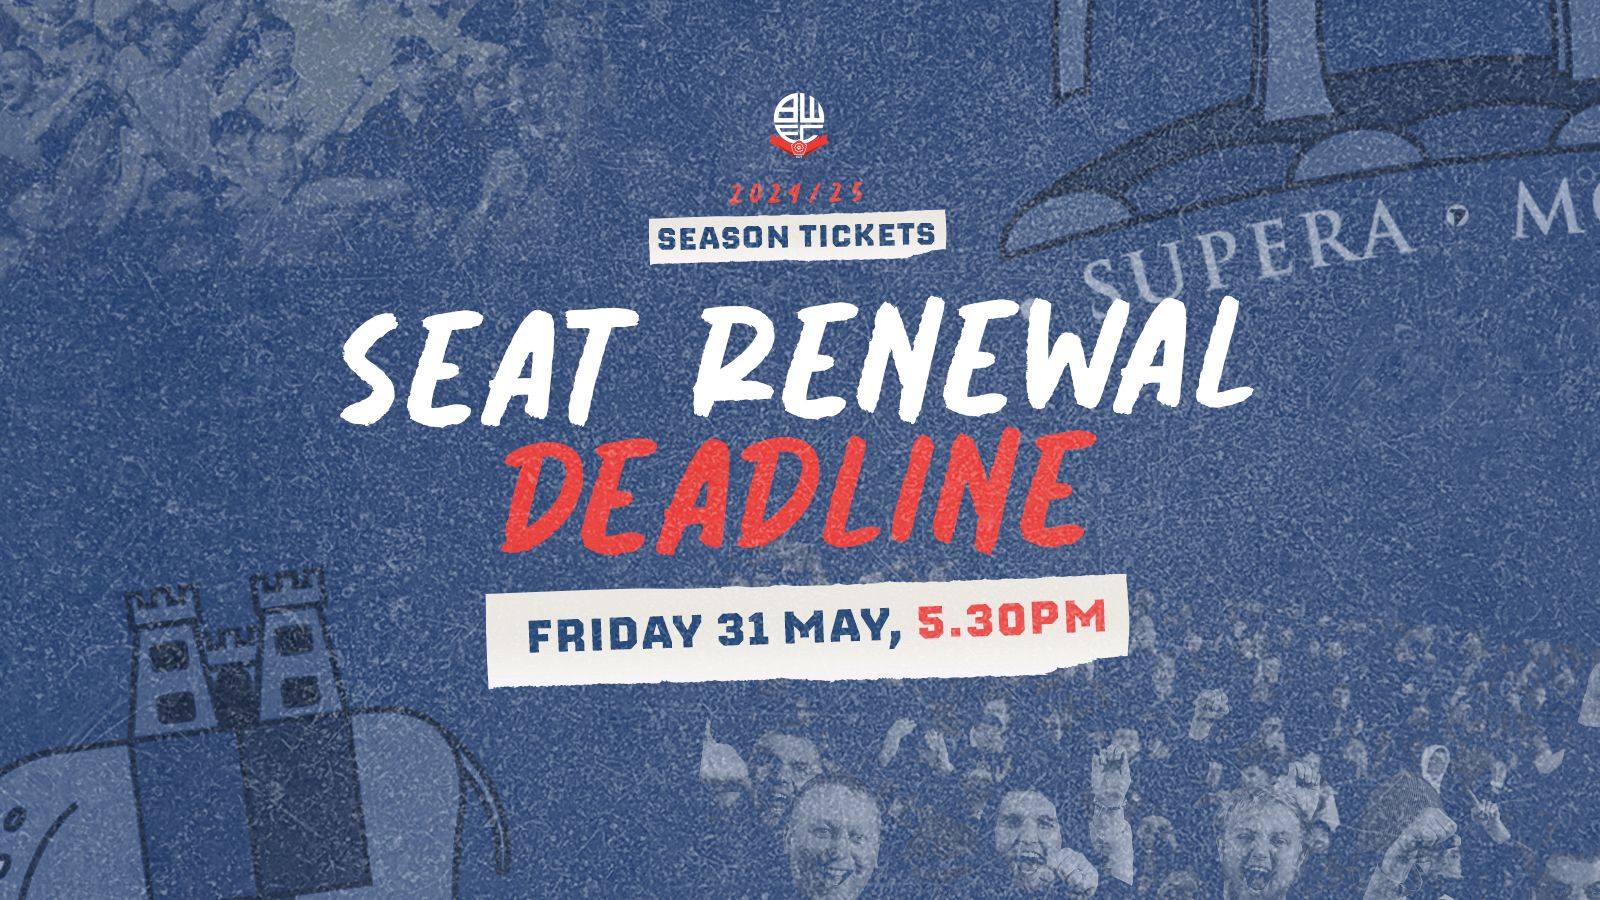 seat renewal deadline